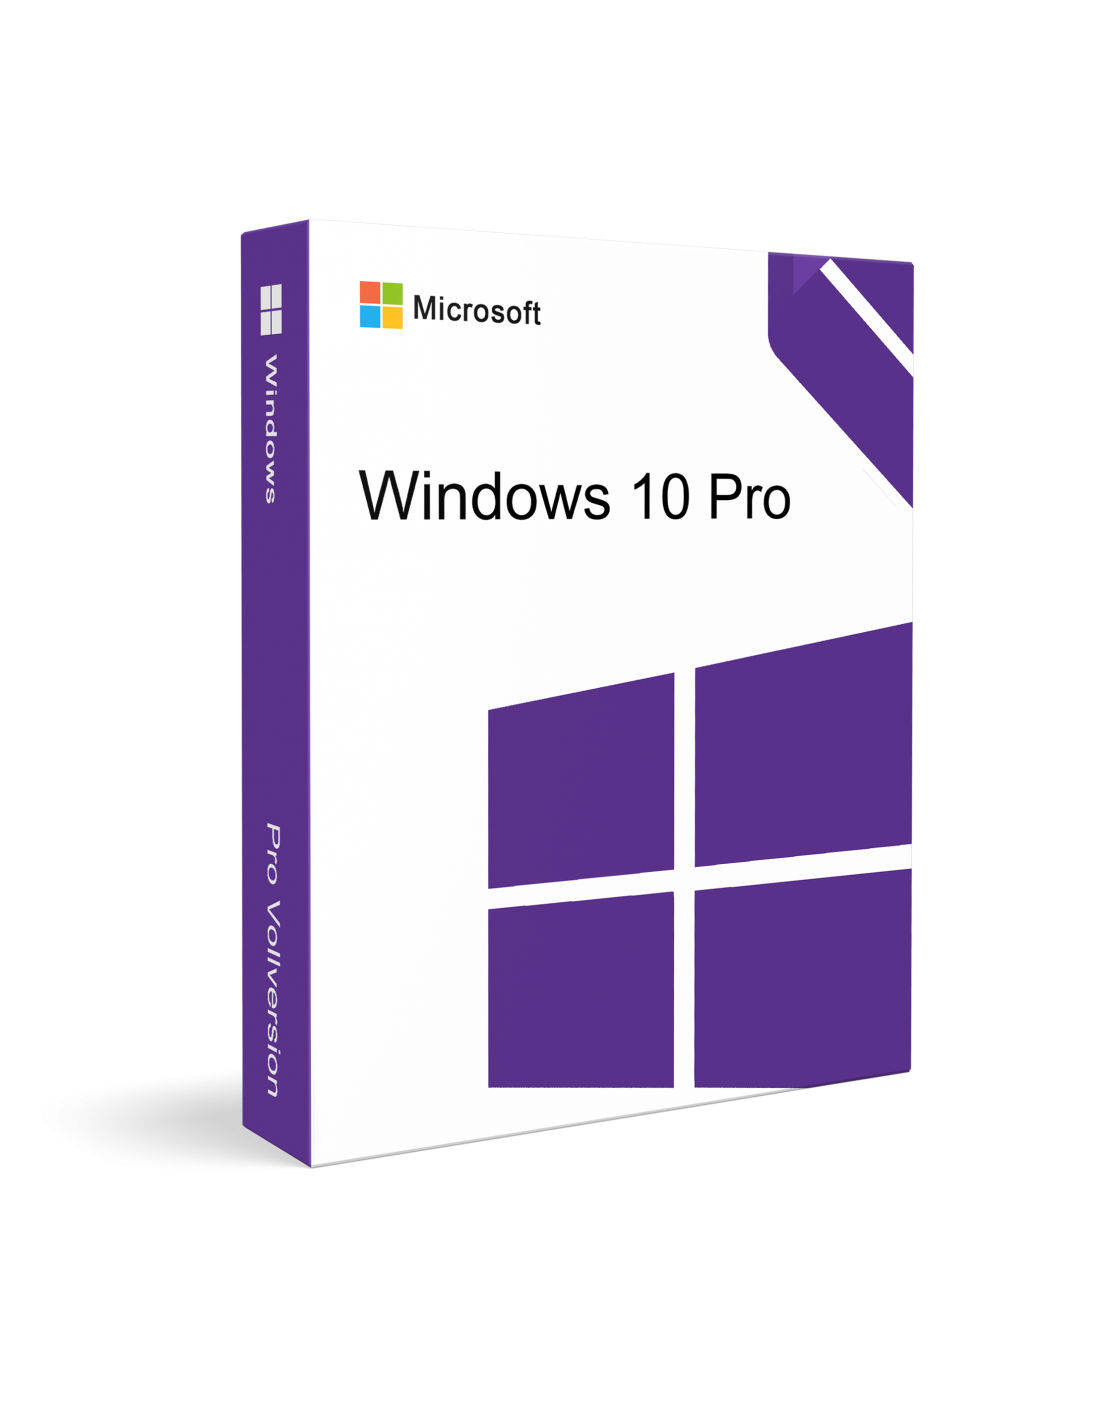 windows 10 pro 10.0.17763.503 iso download